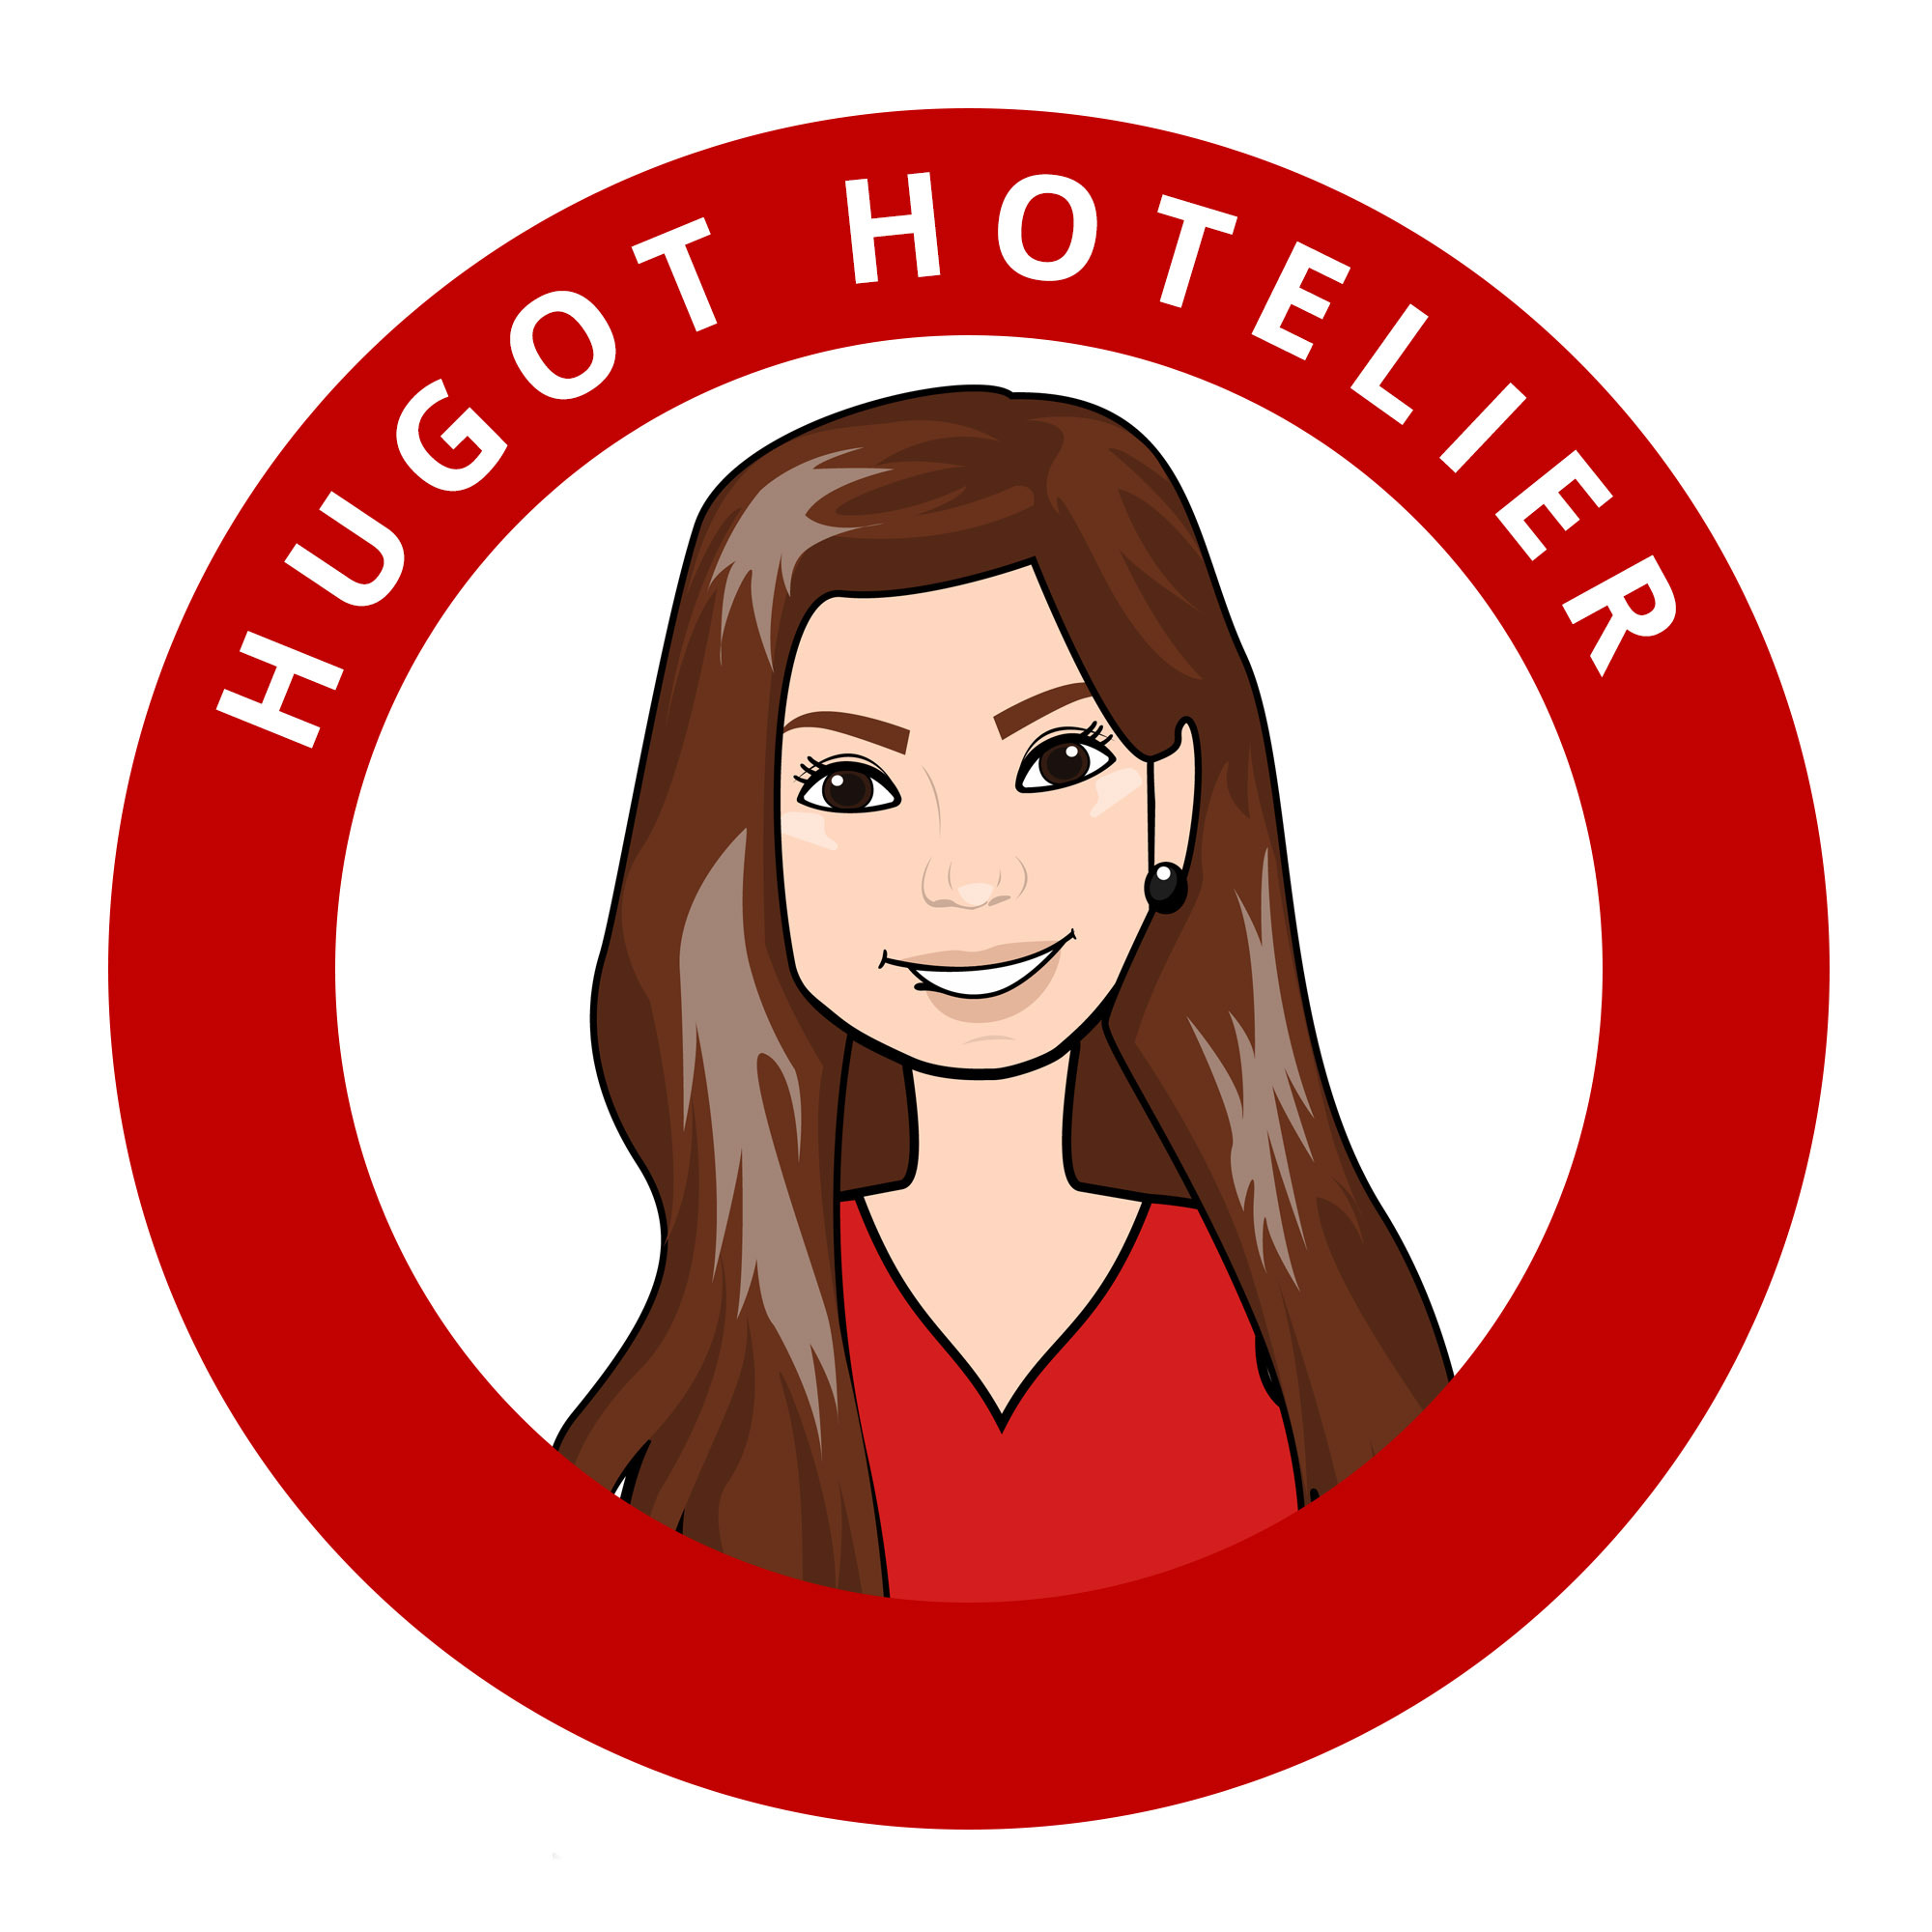 Hugot Hotelier (AKA Angel Lam Ko Maranan) joined MY RANGGO in August 2021